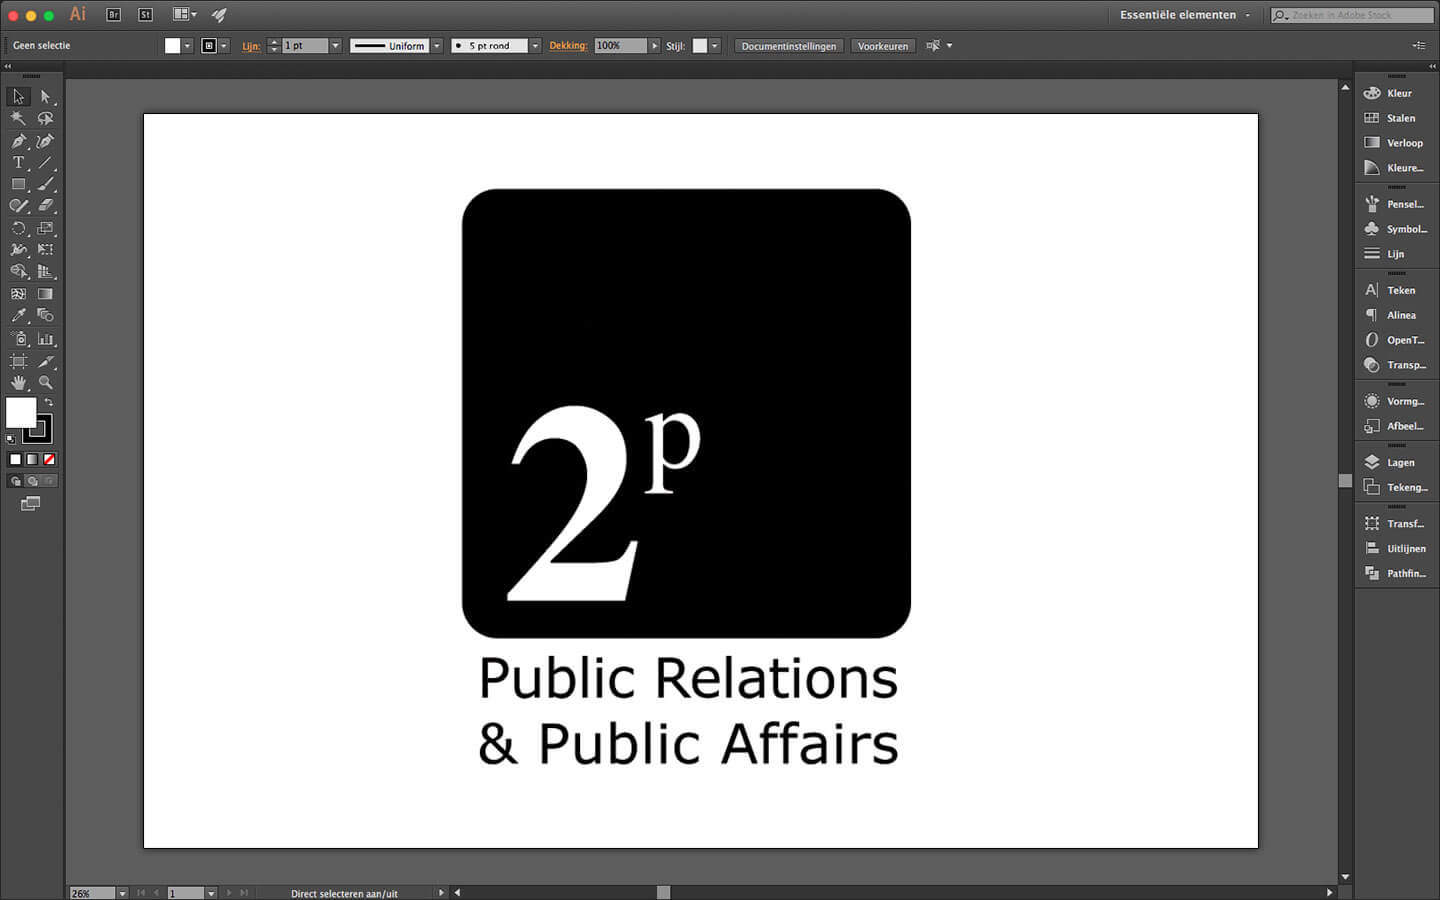 Logo ontwerp voor Public Relations & Public Affairs bureau 2P